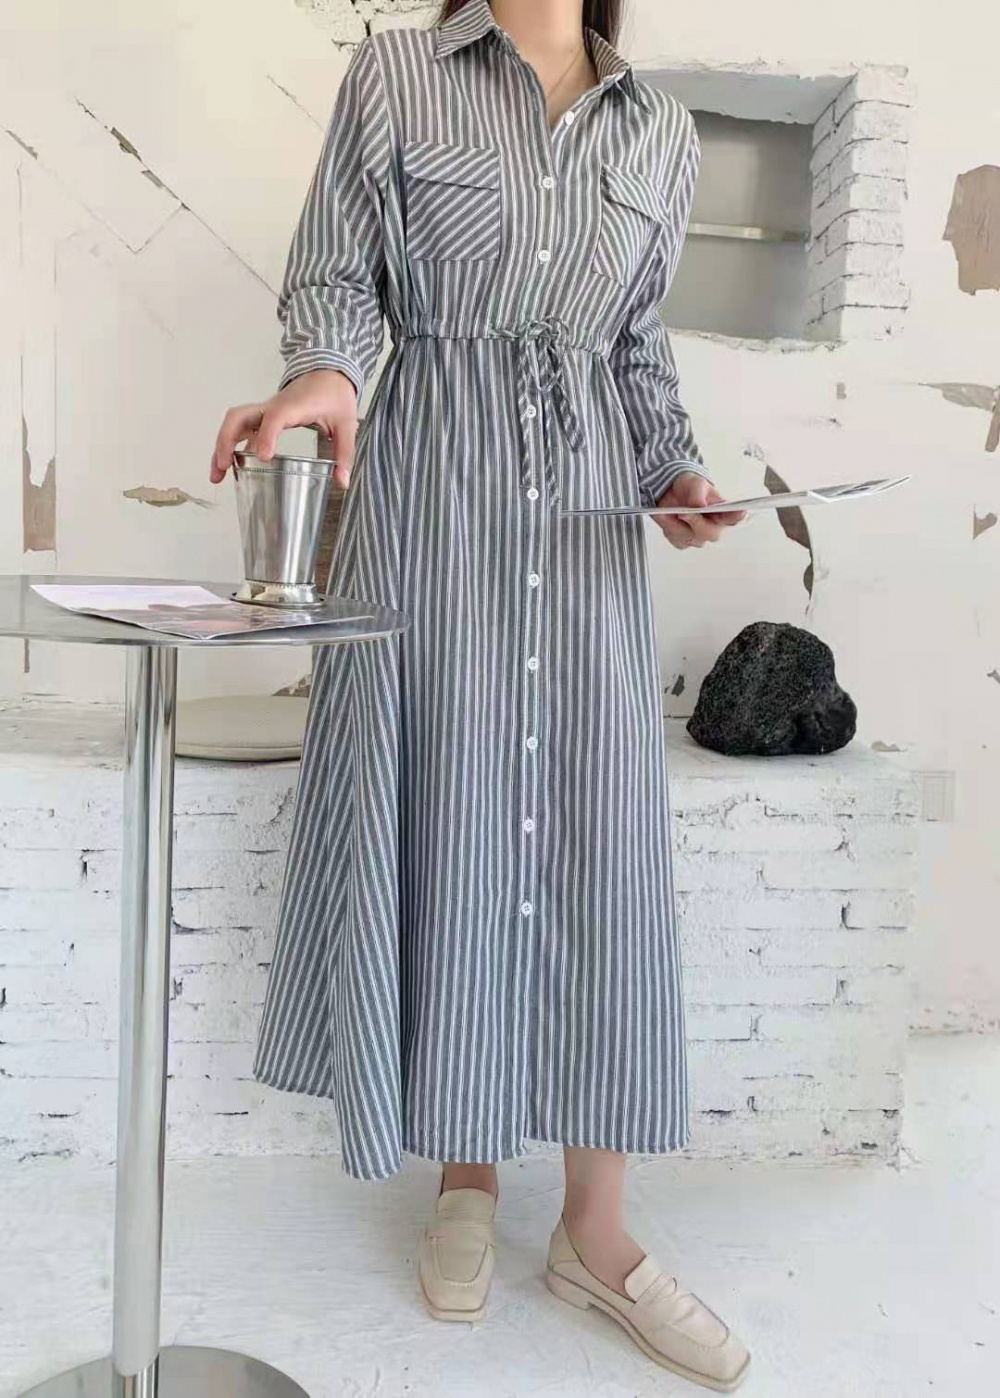 Drawstring cotton linen stripe slim Korean style dress